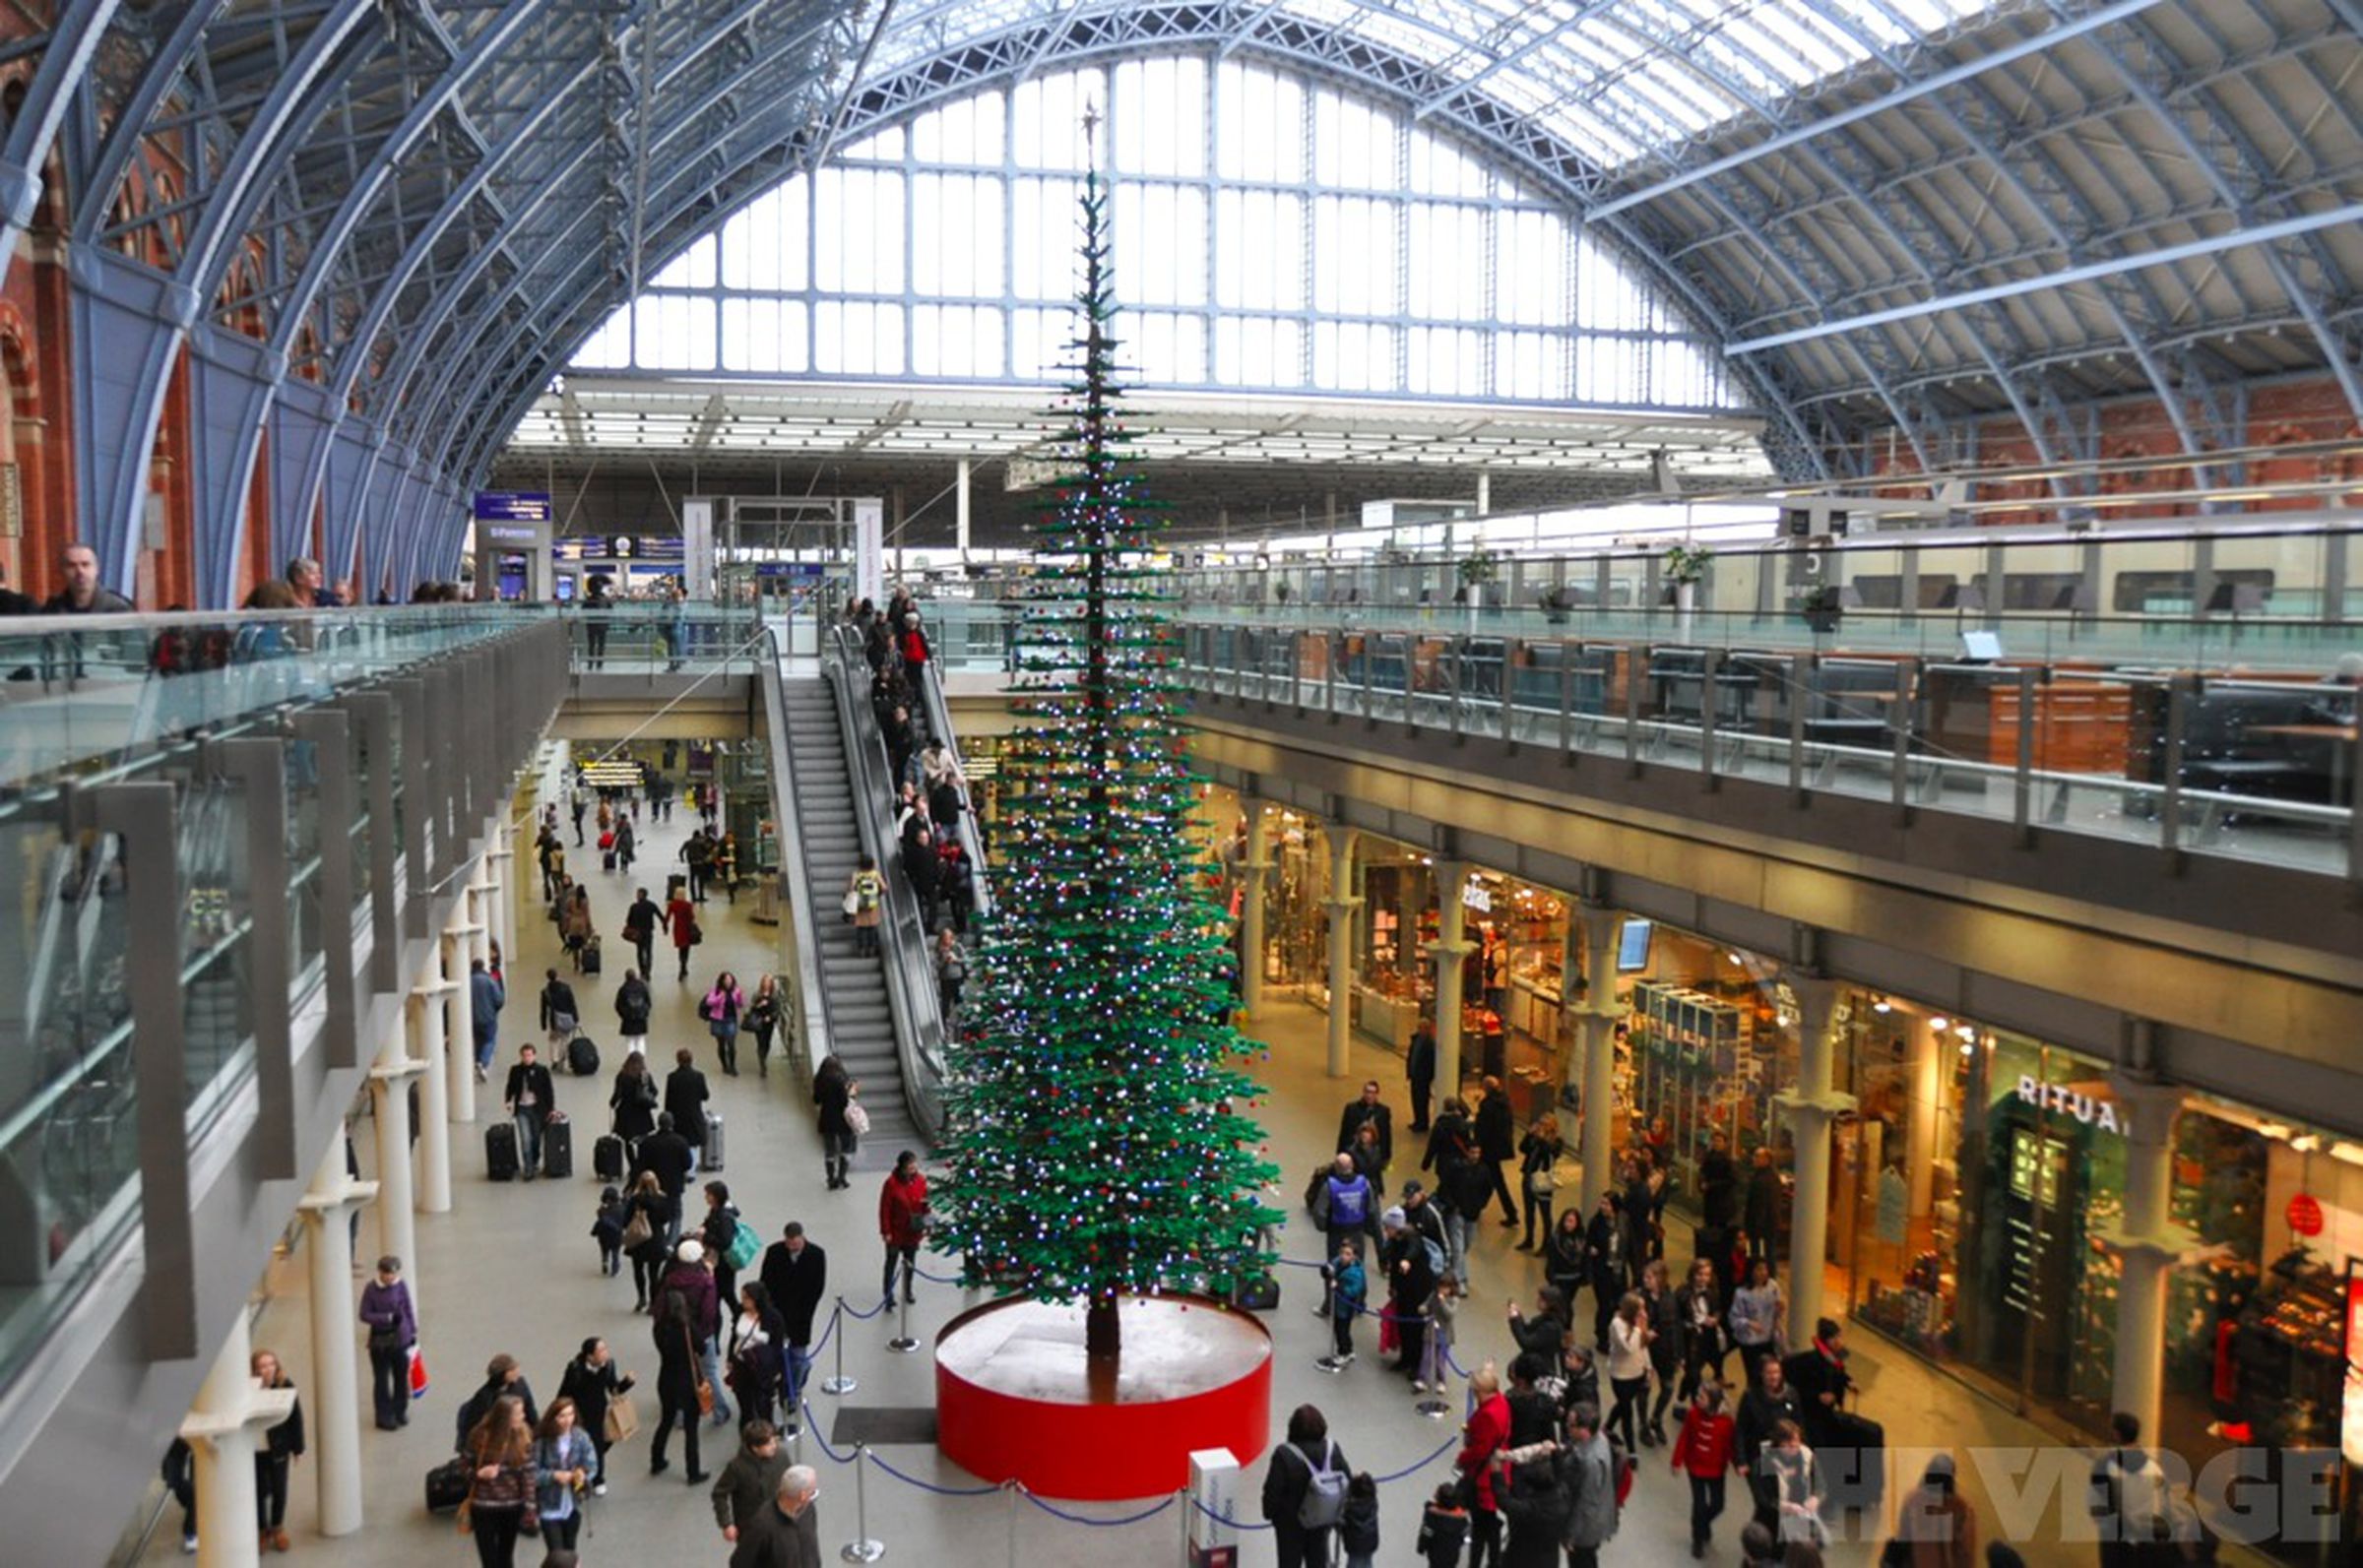 Lego Christmas tree inside London's St Pancras Station